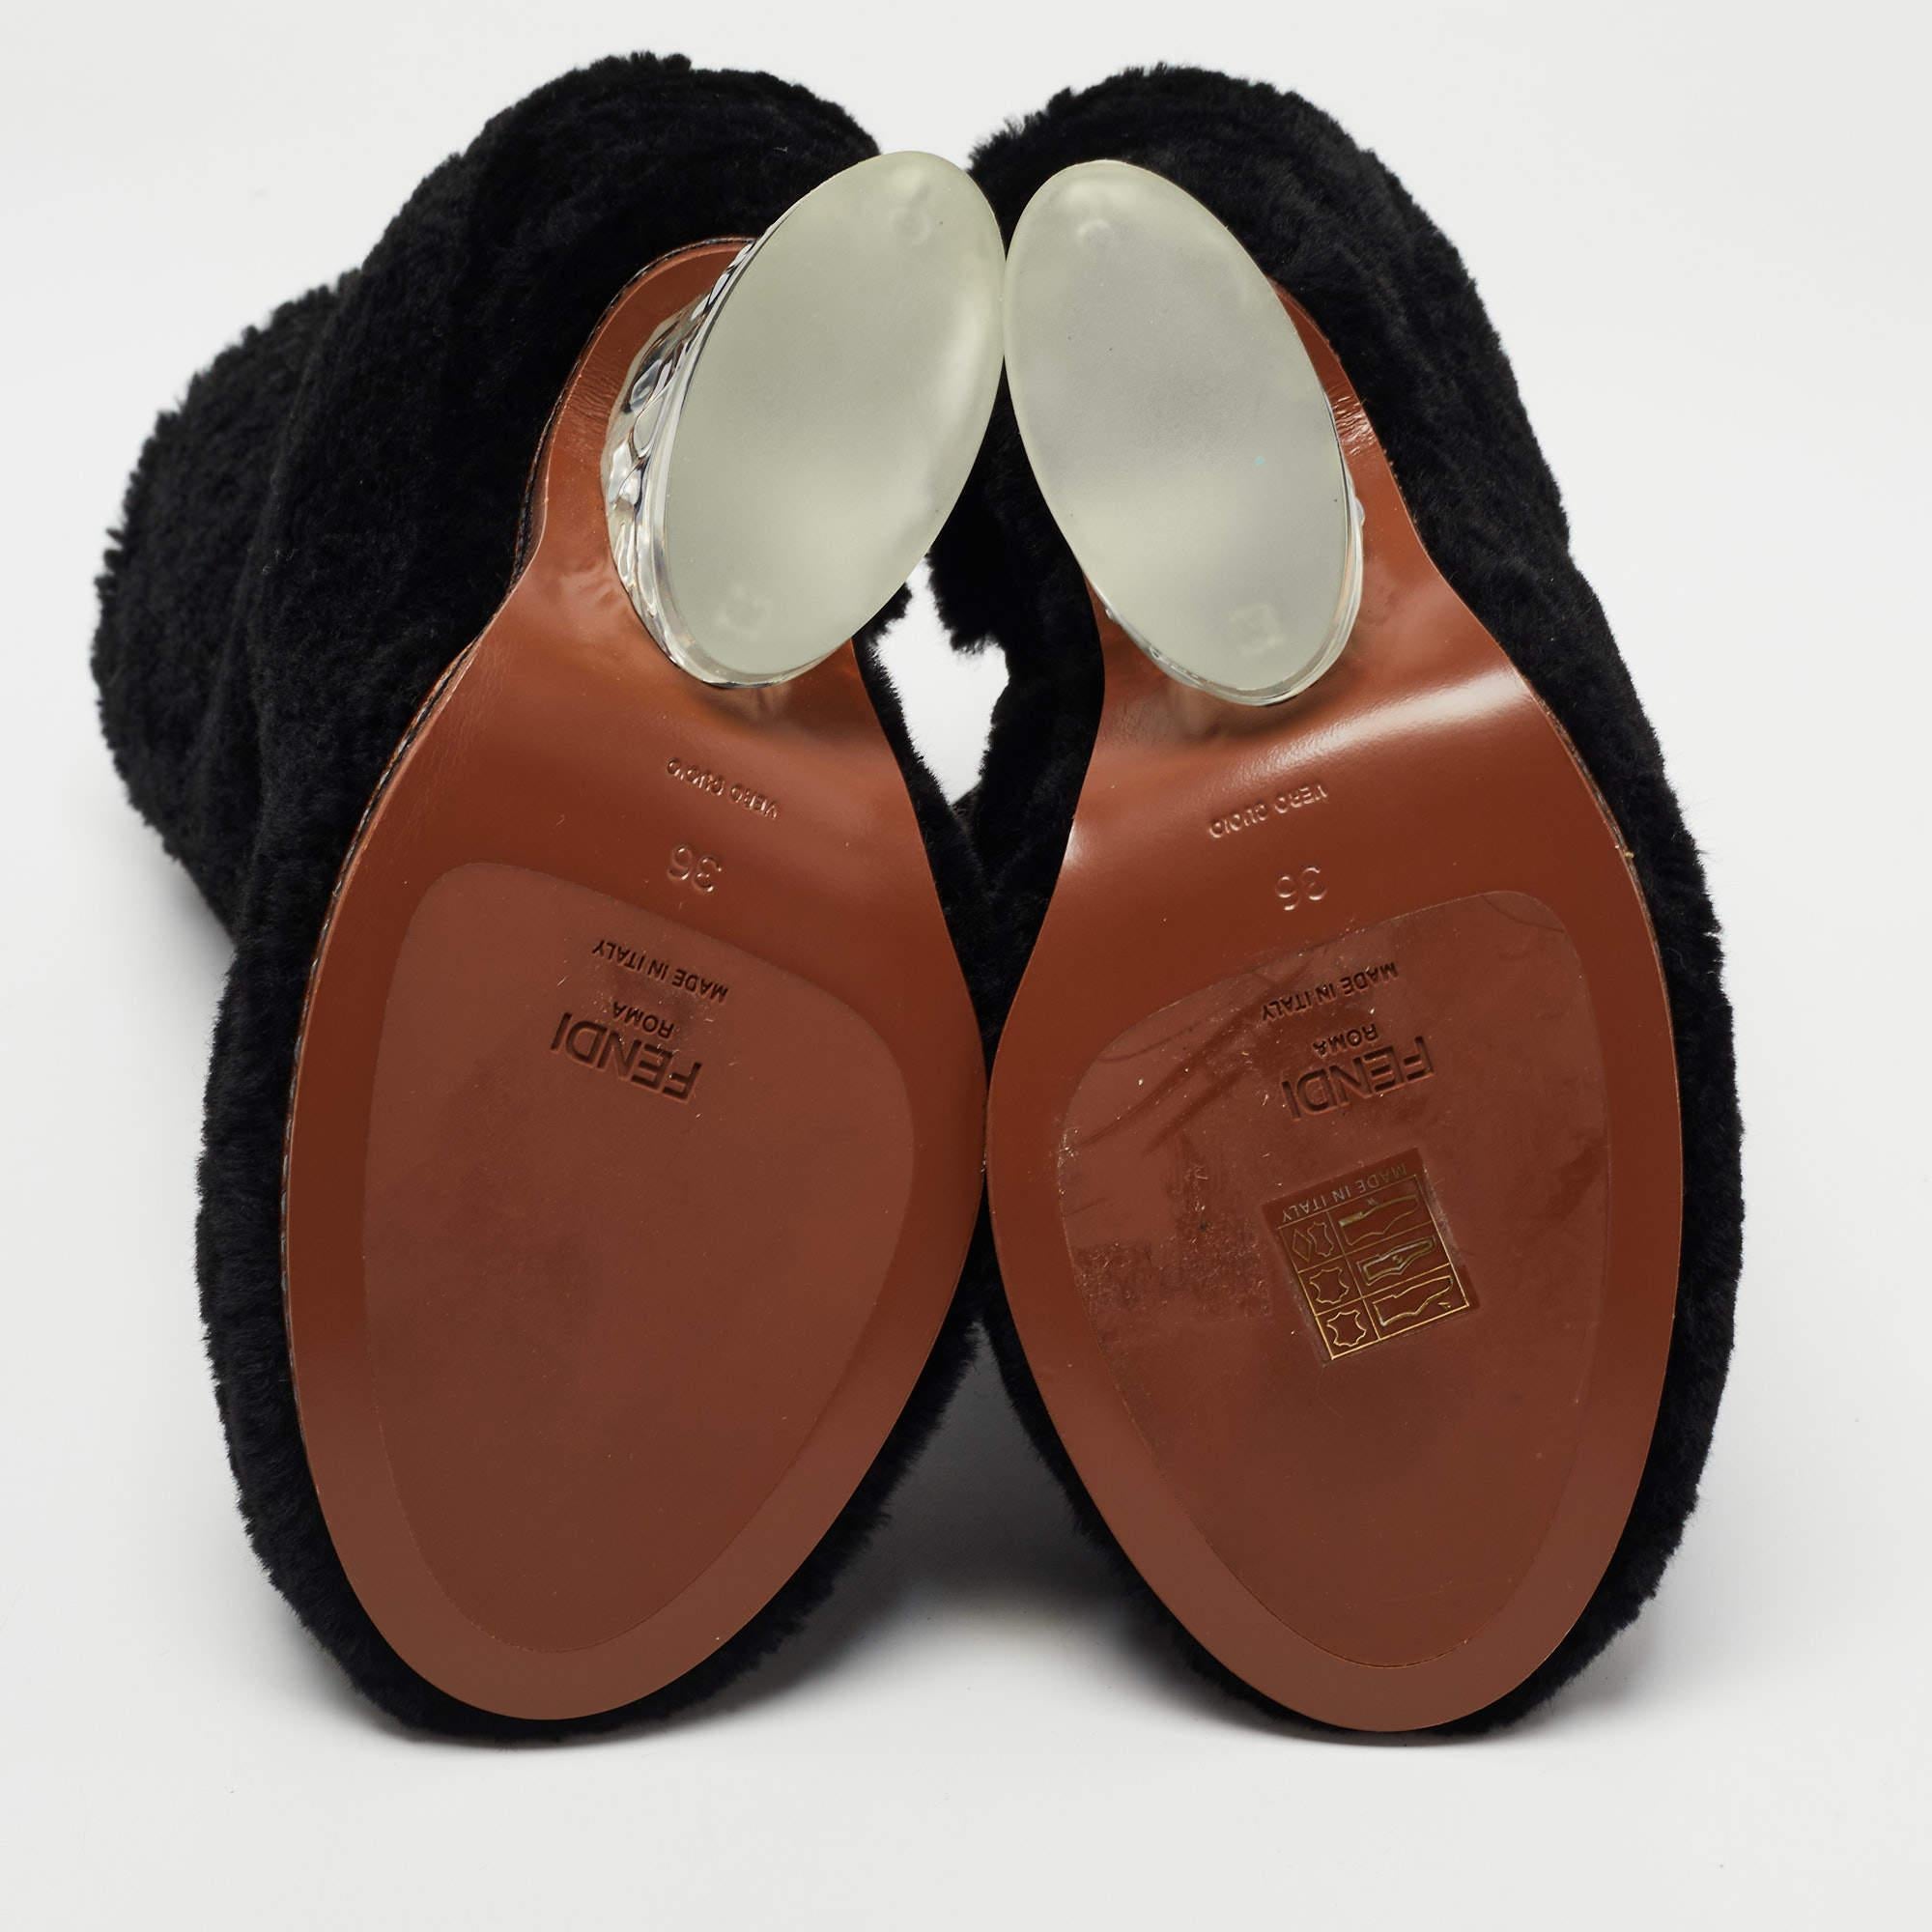 Fendi Black Fur Ice Heel Ankle Boots Size 36 5